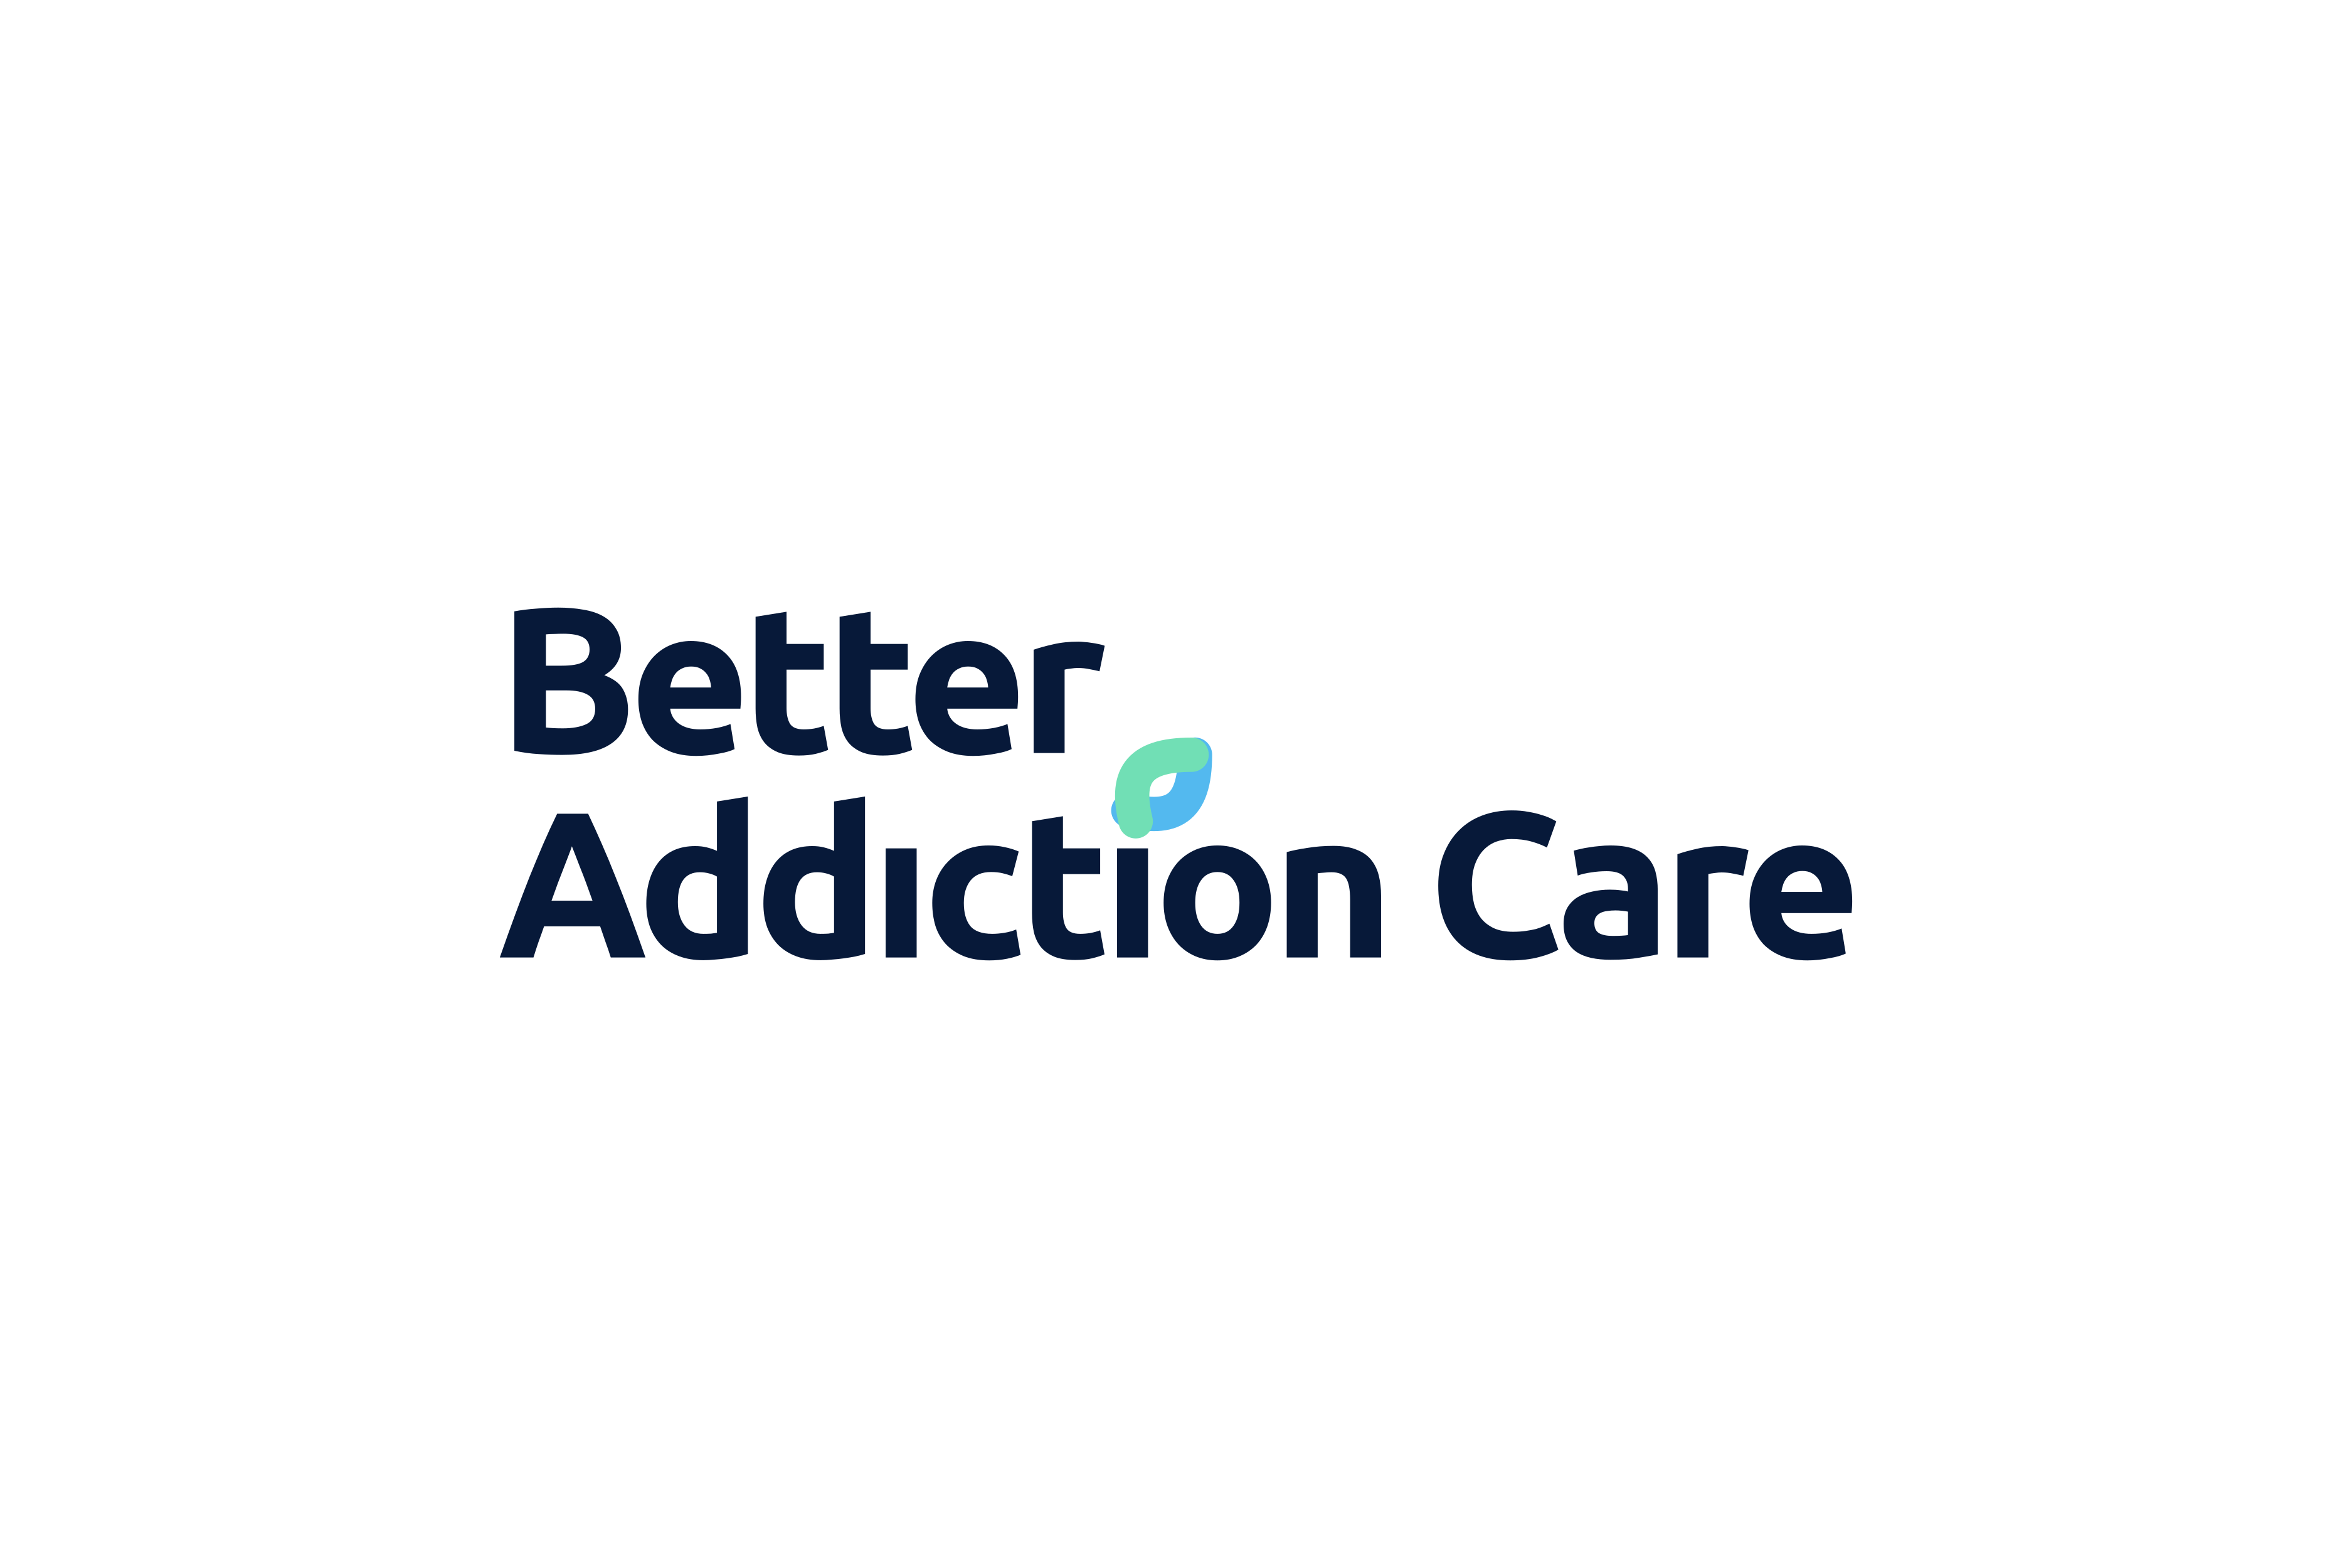 (c) Betteraddictioncare.com